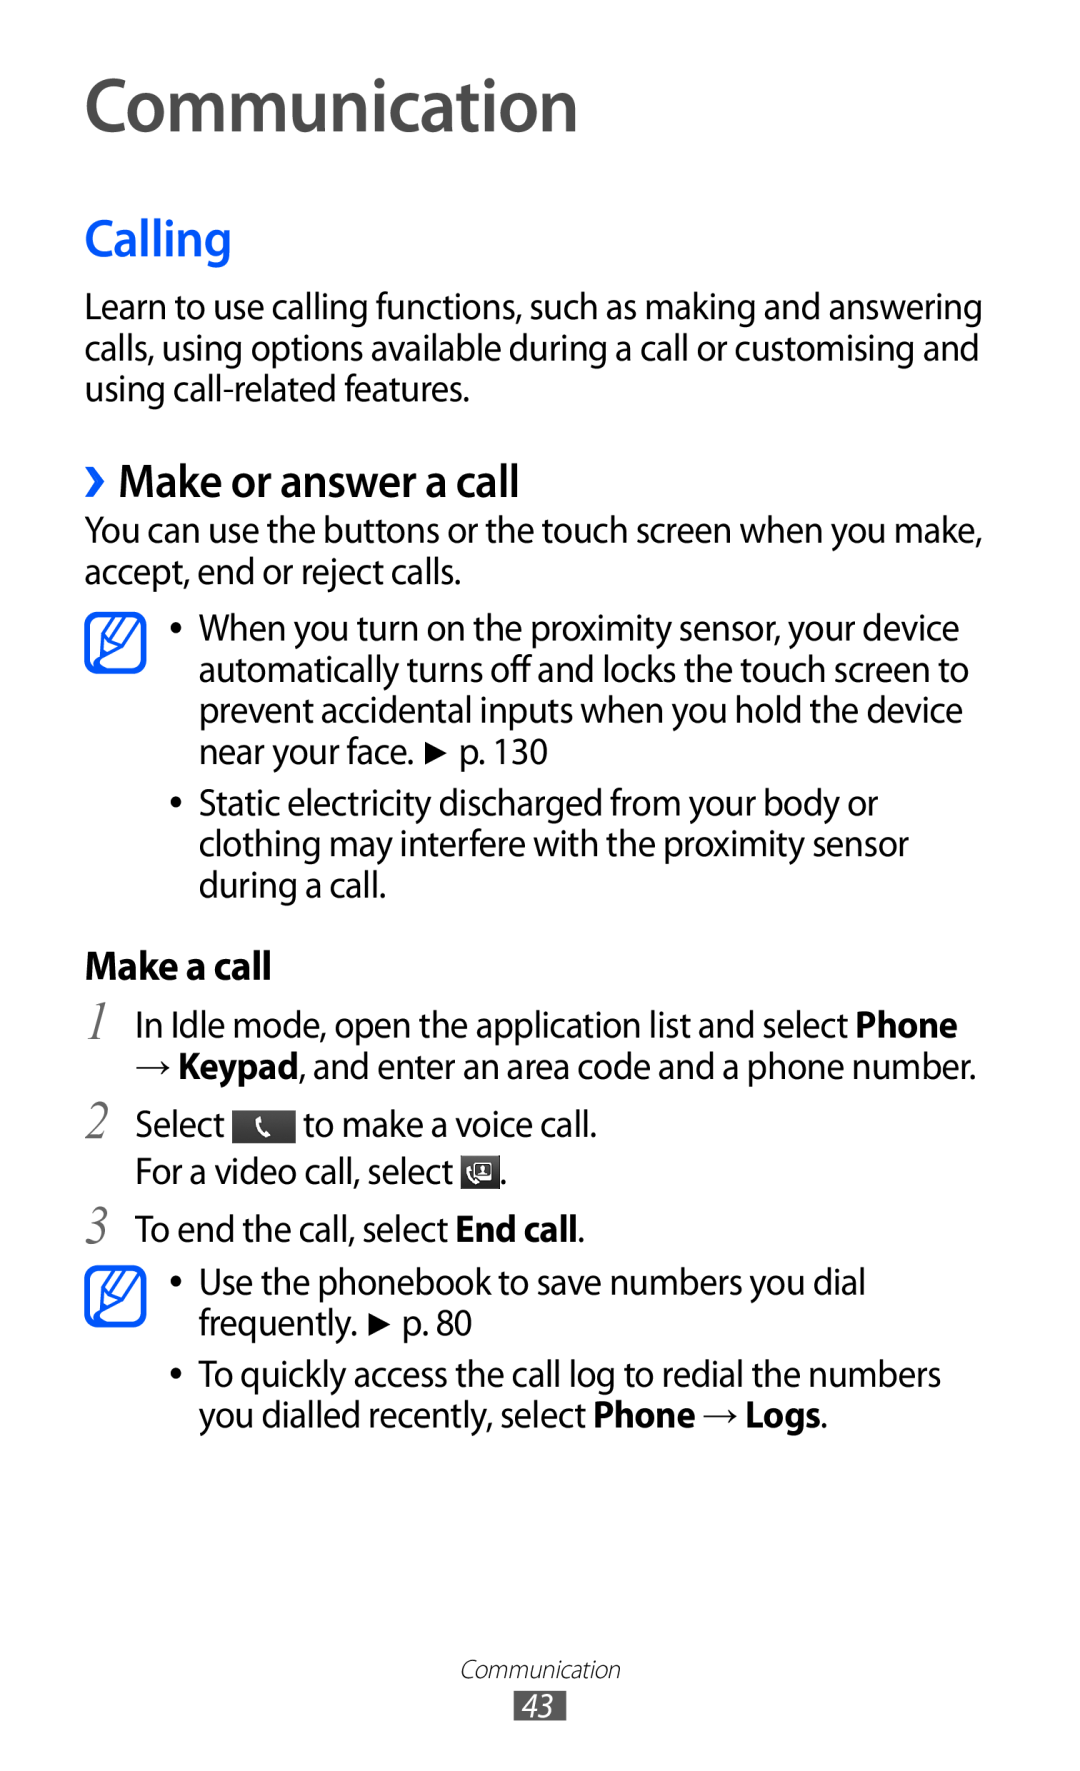 Samsung GT-I9070HKABTC, GT-I9070RWAJED, GT-I9070RWATHR manual Communication, Calling, ››Make or answer a call, Make a call 